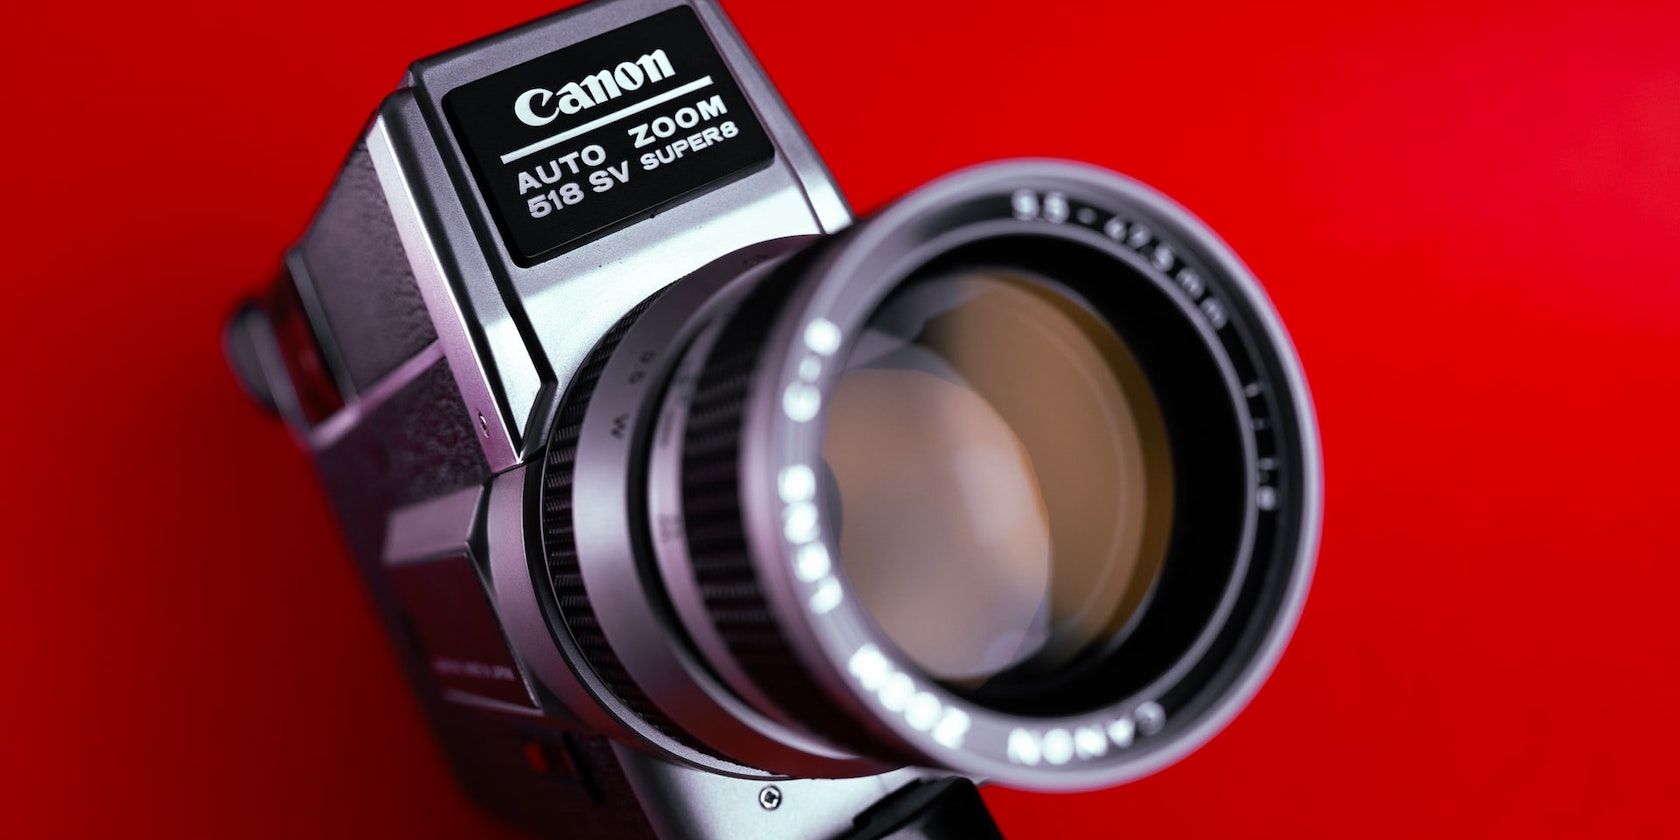 A close-up shot of a cannon super 8 camera.